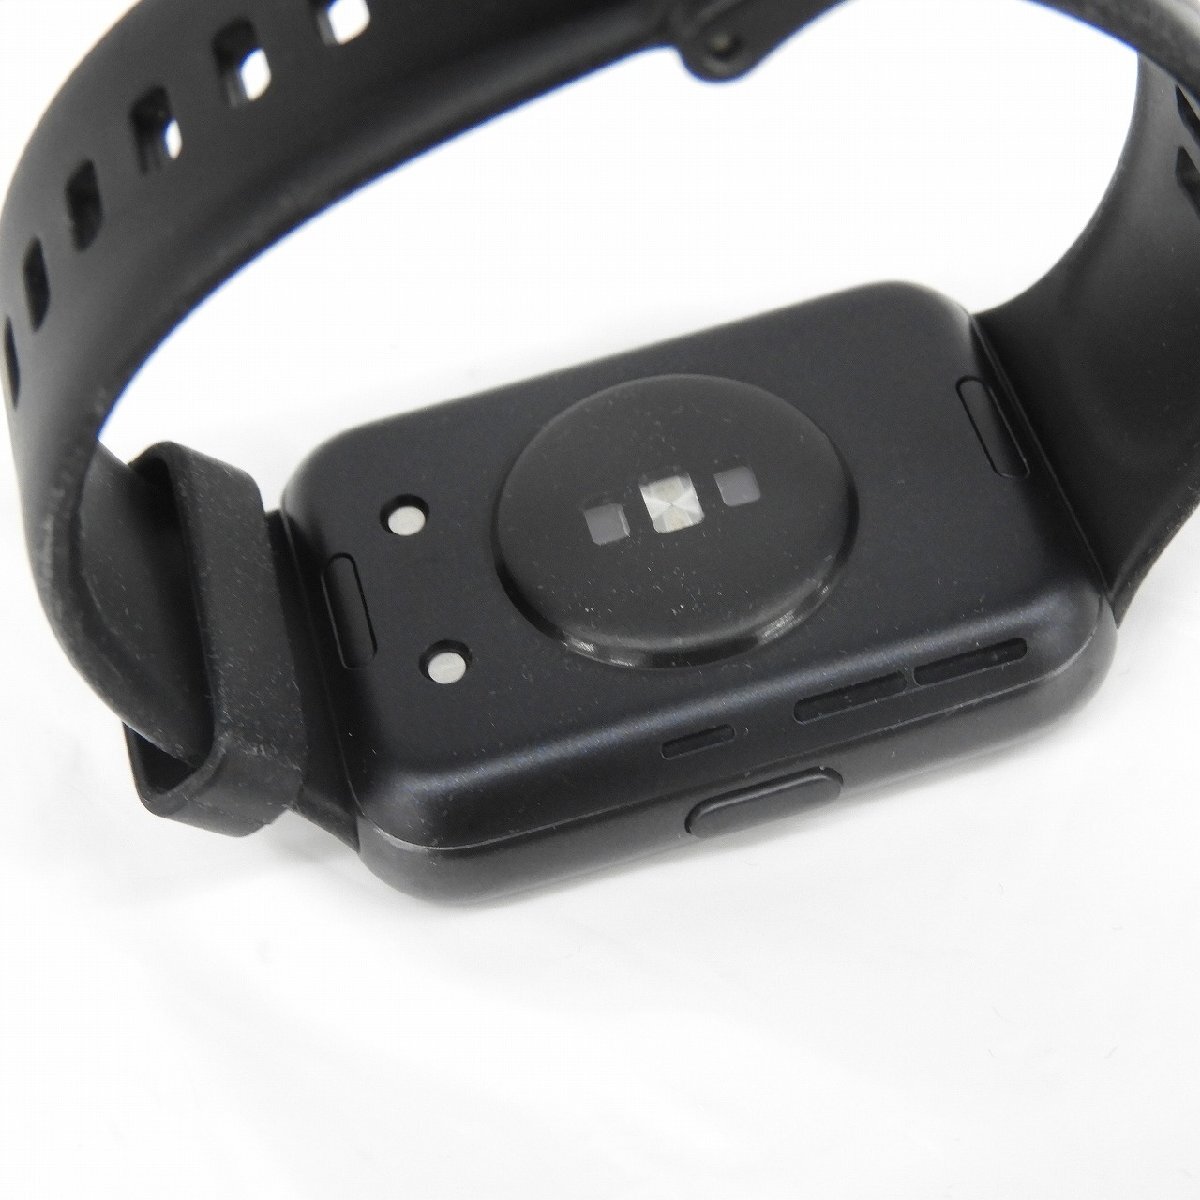 [ б/у товар ]HUAWEI Huawei смарт-часы HUAWEI WATCH FIT 2 активный модель YDA-B09S-BK midnight черный 11571664 0512